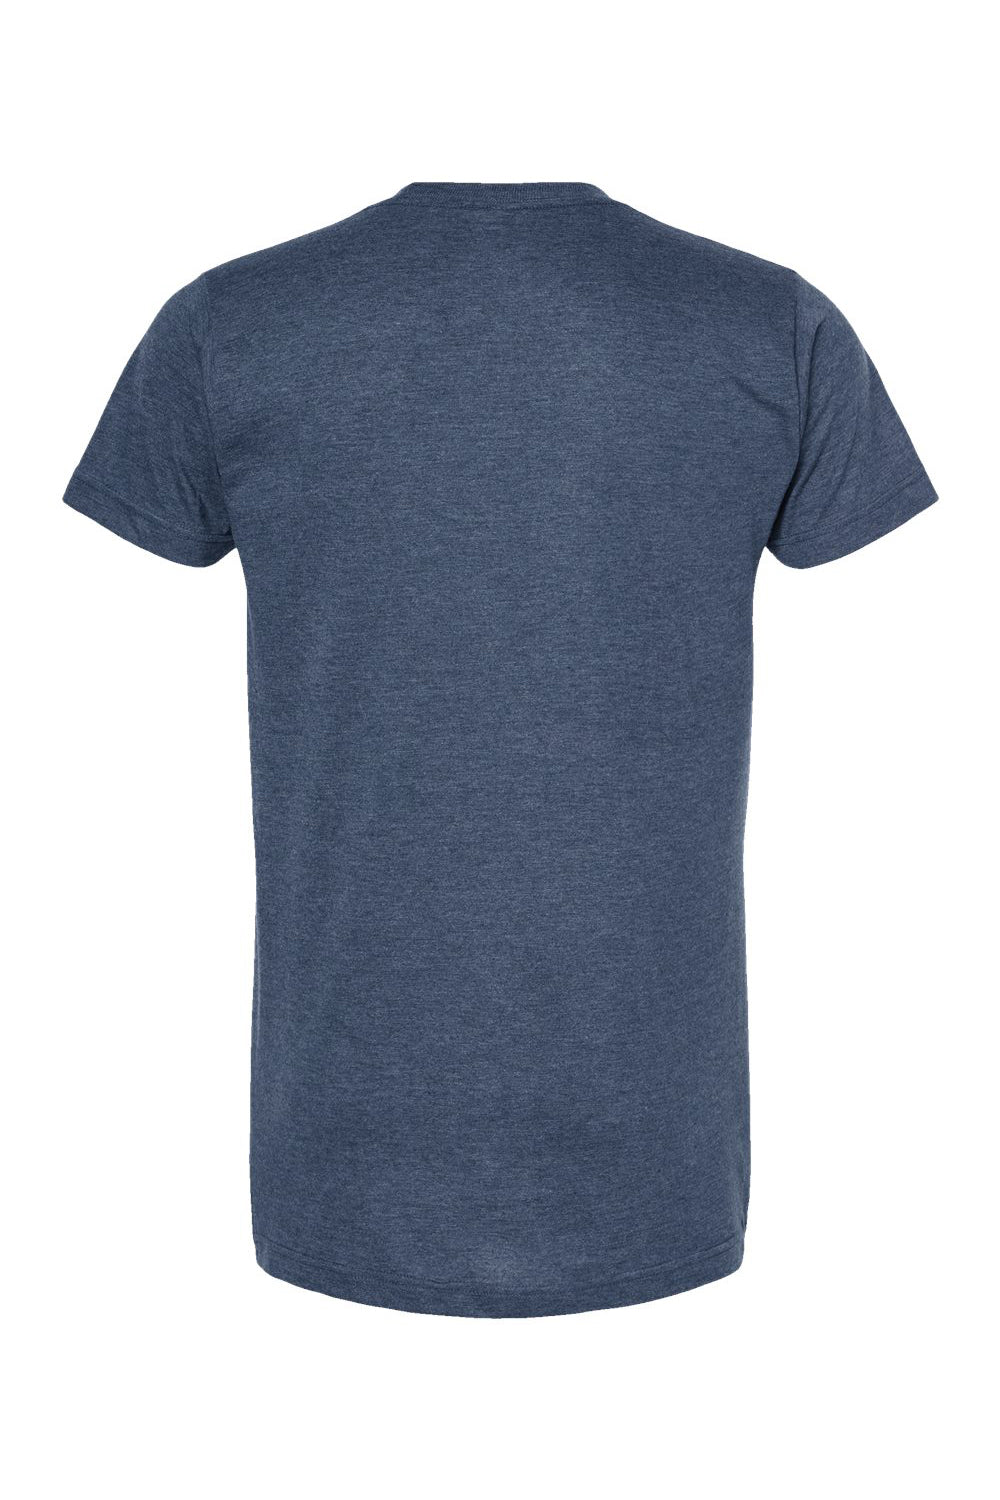 Tultex 202 Mens Fine Jersey Short Sleeve Crewneck T-Shirt Heather Denim Blue Flat Back